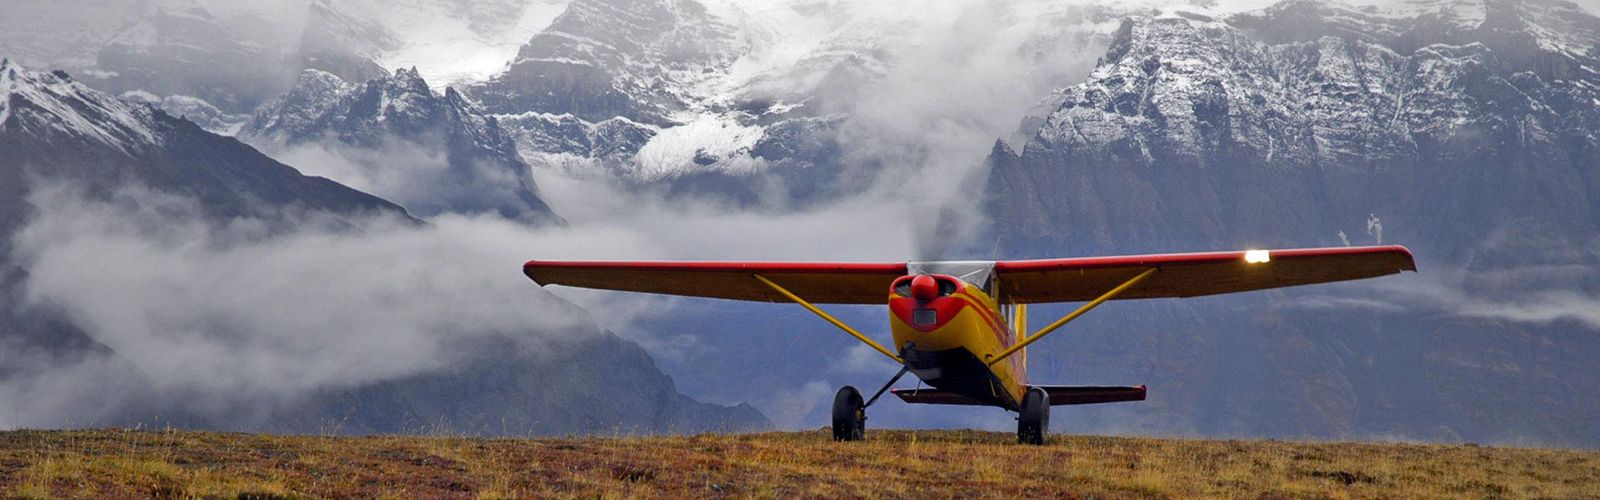 Wolverine airstrip on Goat Trail,  Wrangell St. Elias National Park, Alaska